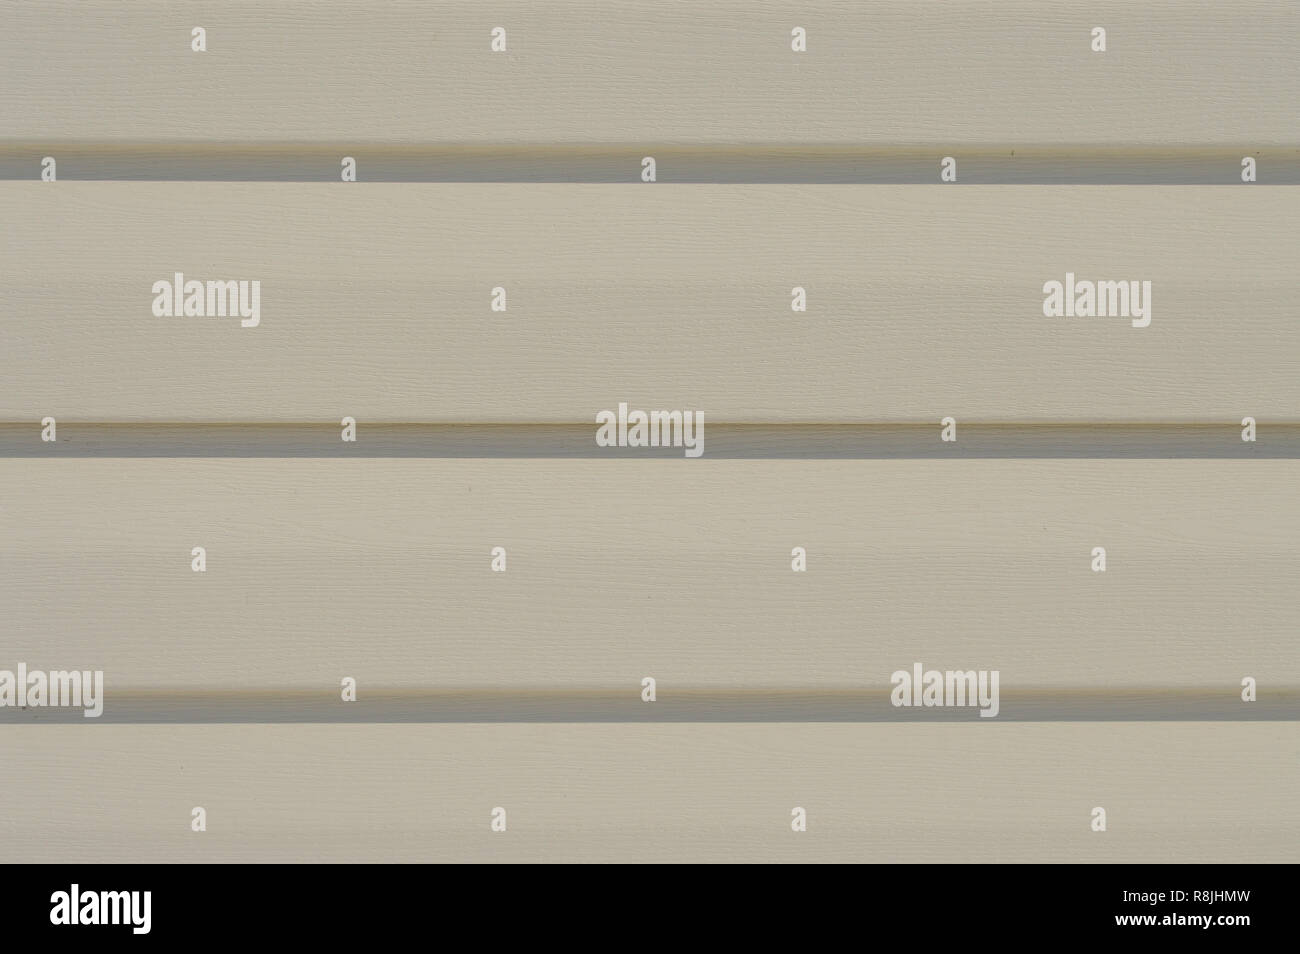 Vinyl siding furniture for exterior wall cladding. Texture design Stock Photo